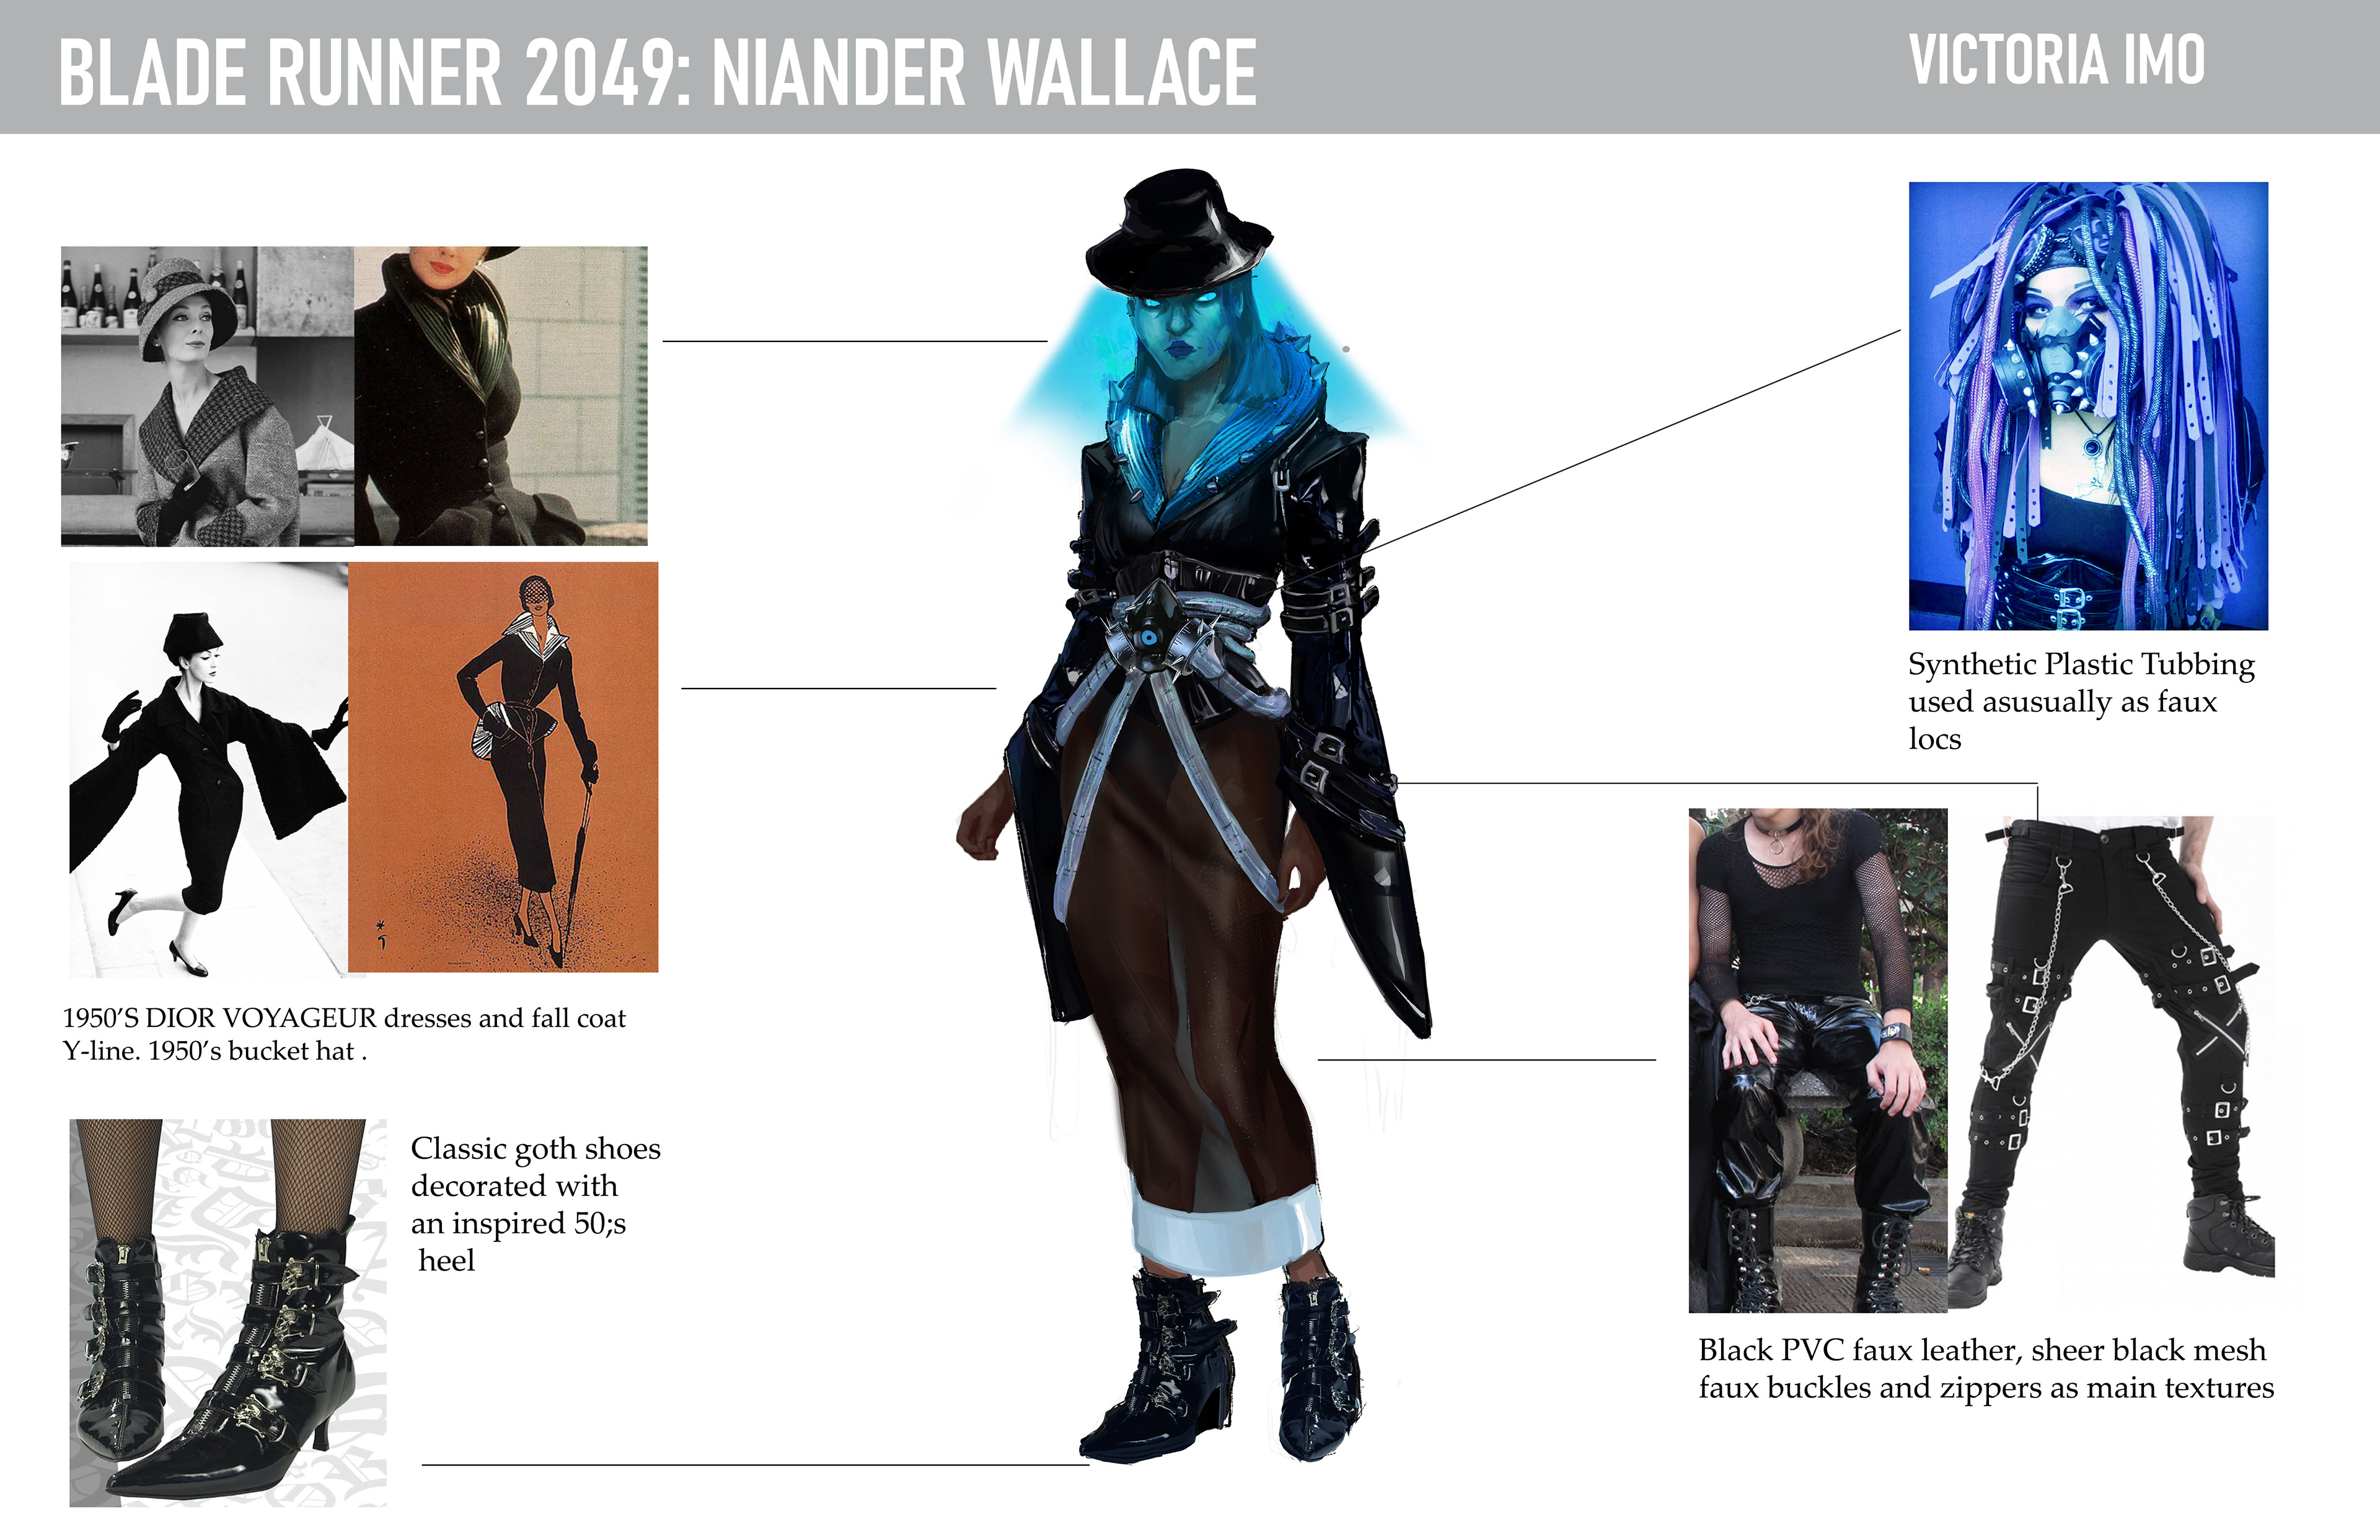 Blade Runner 2049 Inspired Clothes - Blade Runner Inspired Fashion